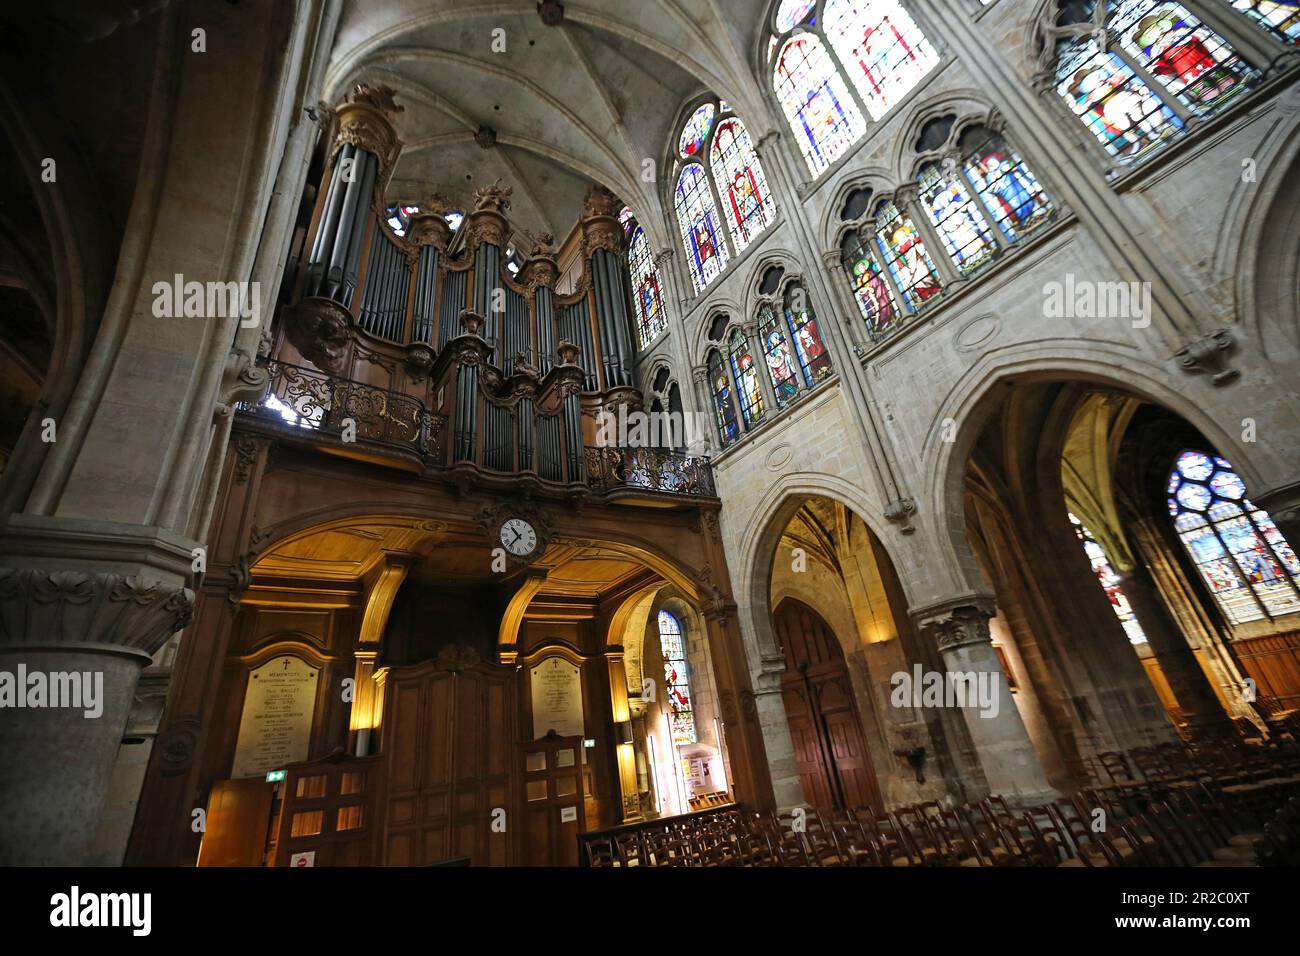 The Grand Organ - Saint-Severin Church - Paris, France Stock Photo